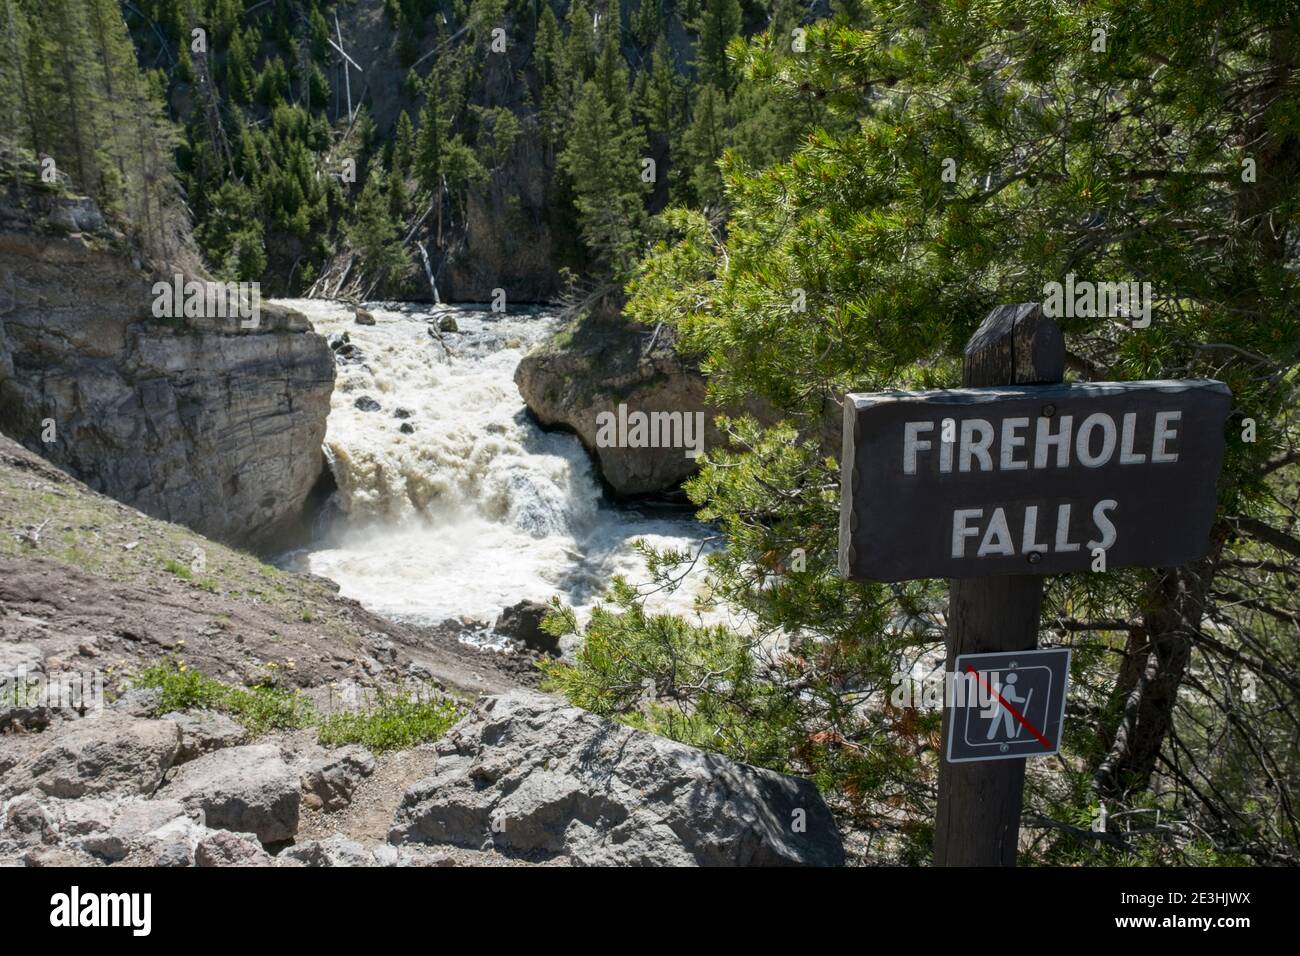 Parc national de Yellowstone Waterfall de Firehole Falls, Wyoming, États-Unis Banque D'Images